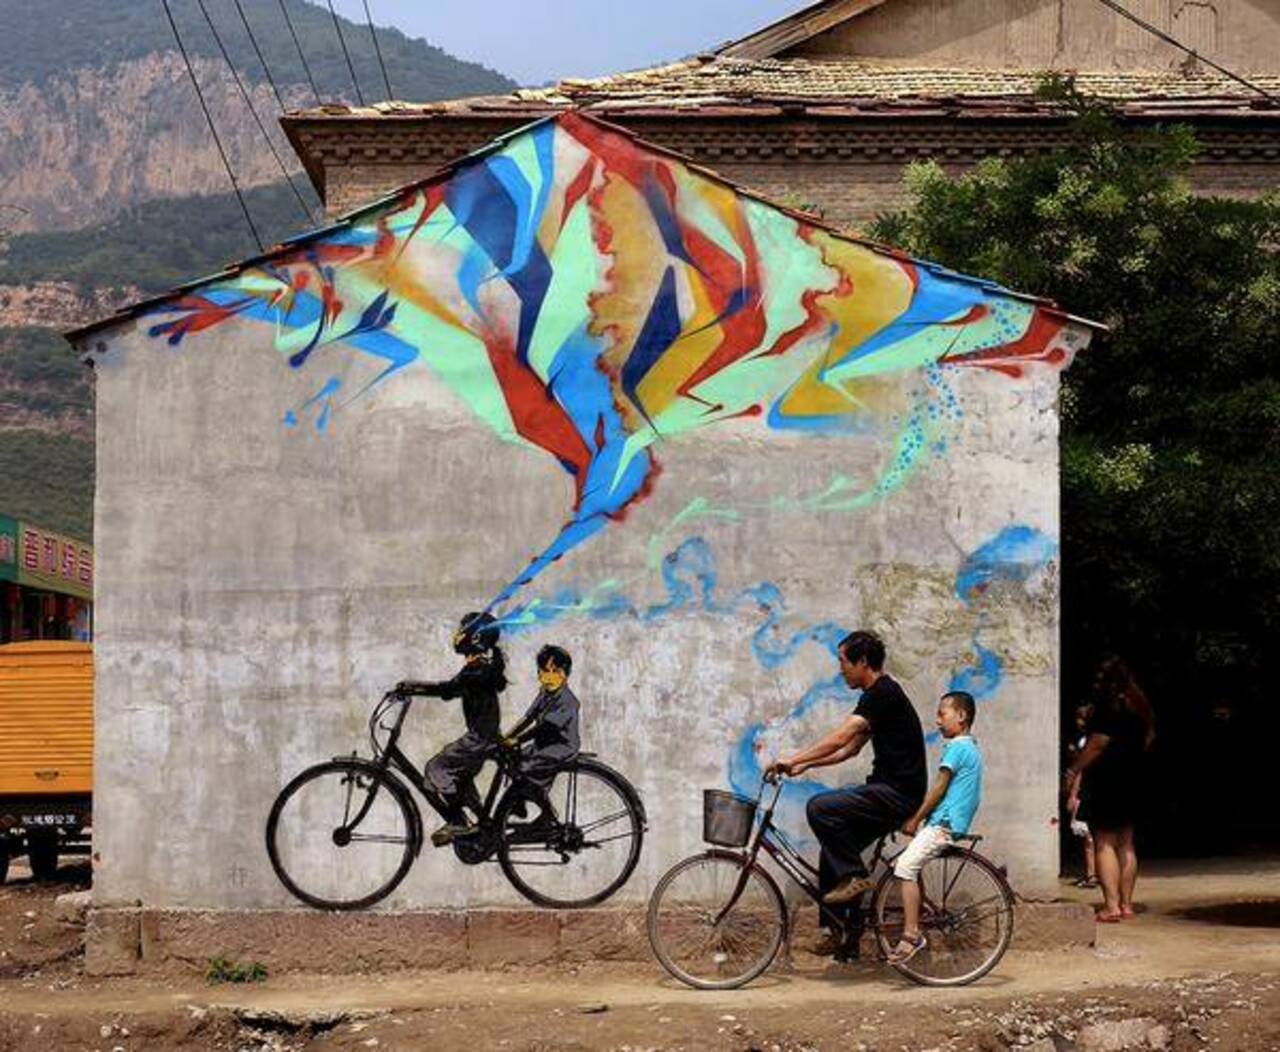 RT @Bastet_11: #wallart by #Stinkfish - #Xucun #China - Aug 2015 #streetart #urbanart #mural #graffiti #STREETPHOTOGRAPHERS #urbano http://t.co/C5Xl8e5u9S